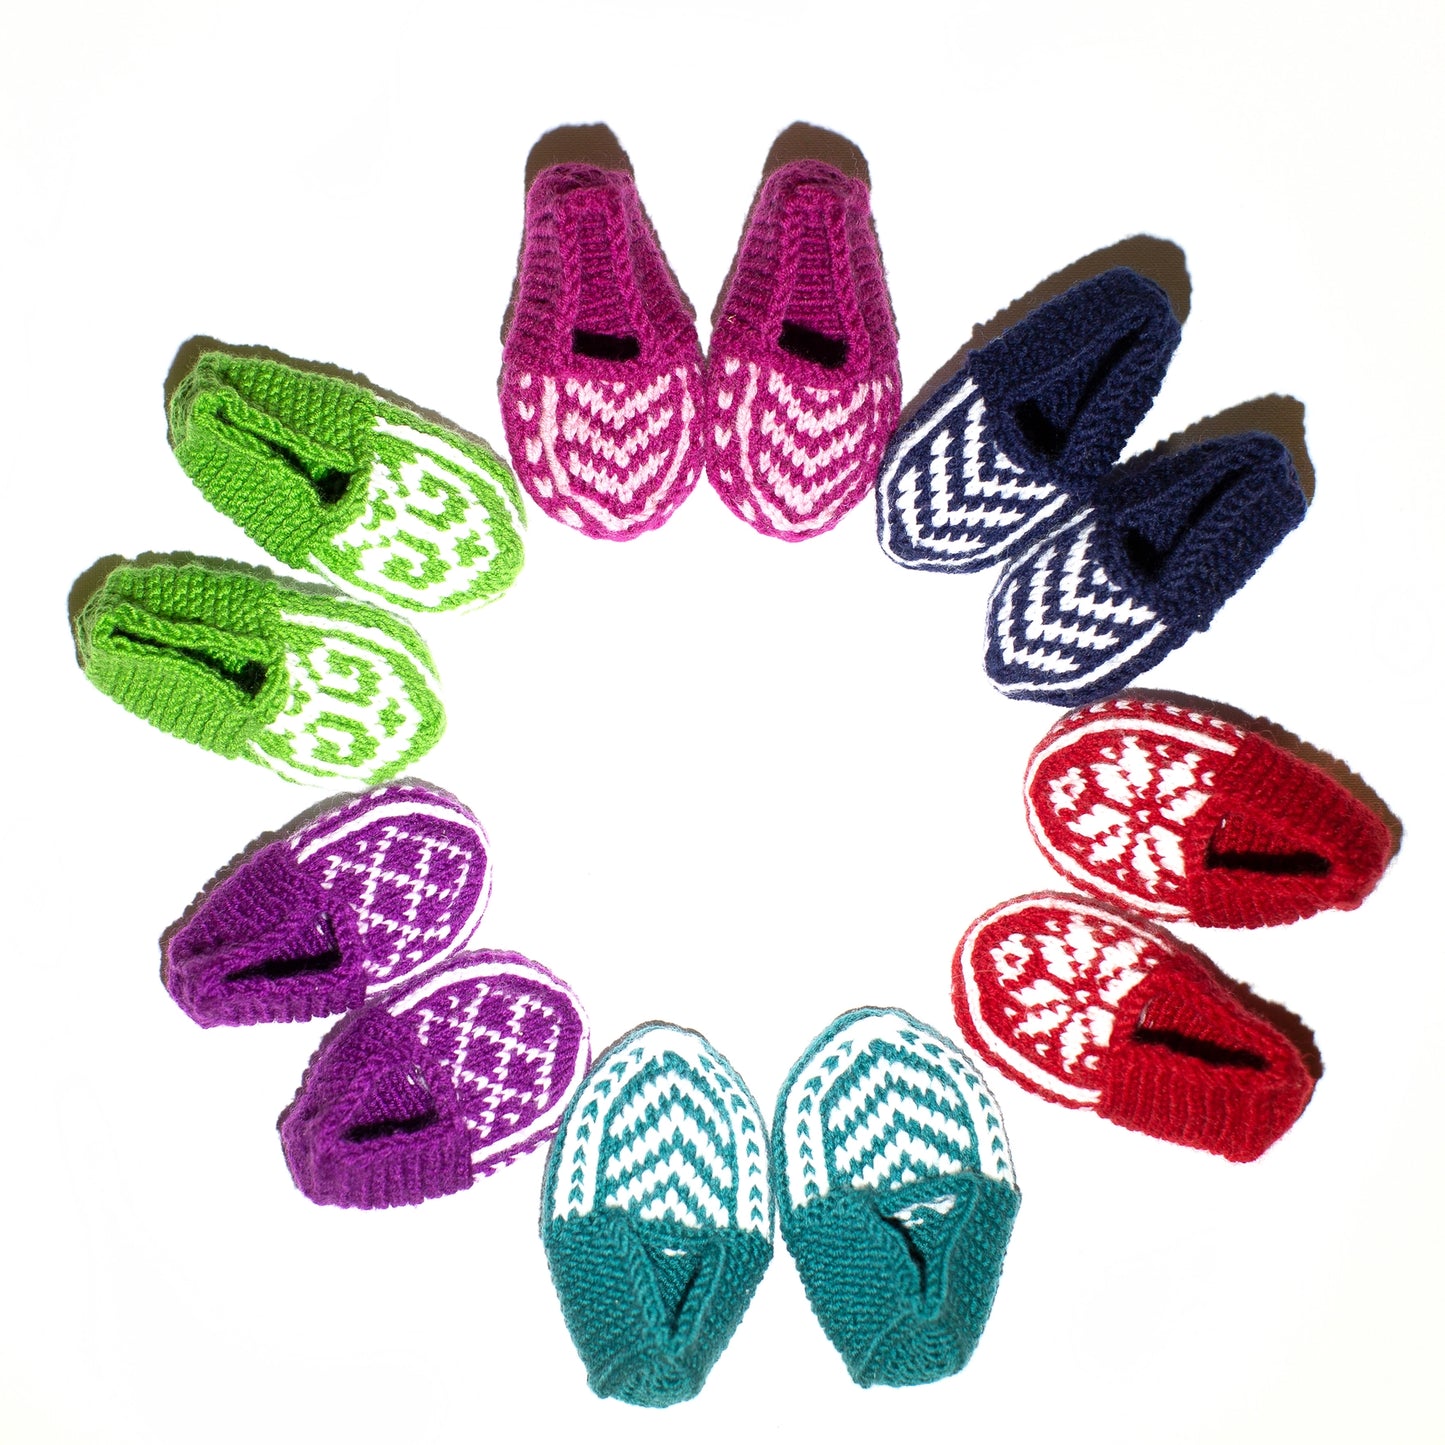 Azerbaijani Socks  - Knit Baby Socks